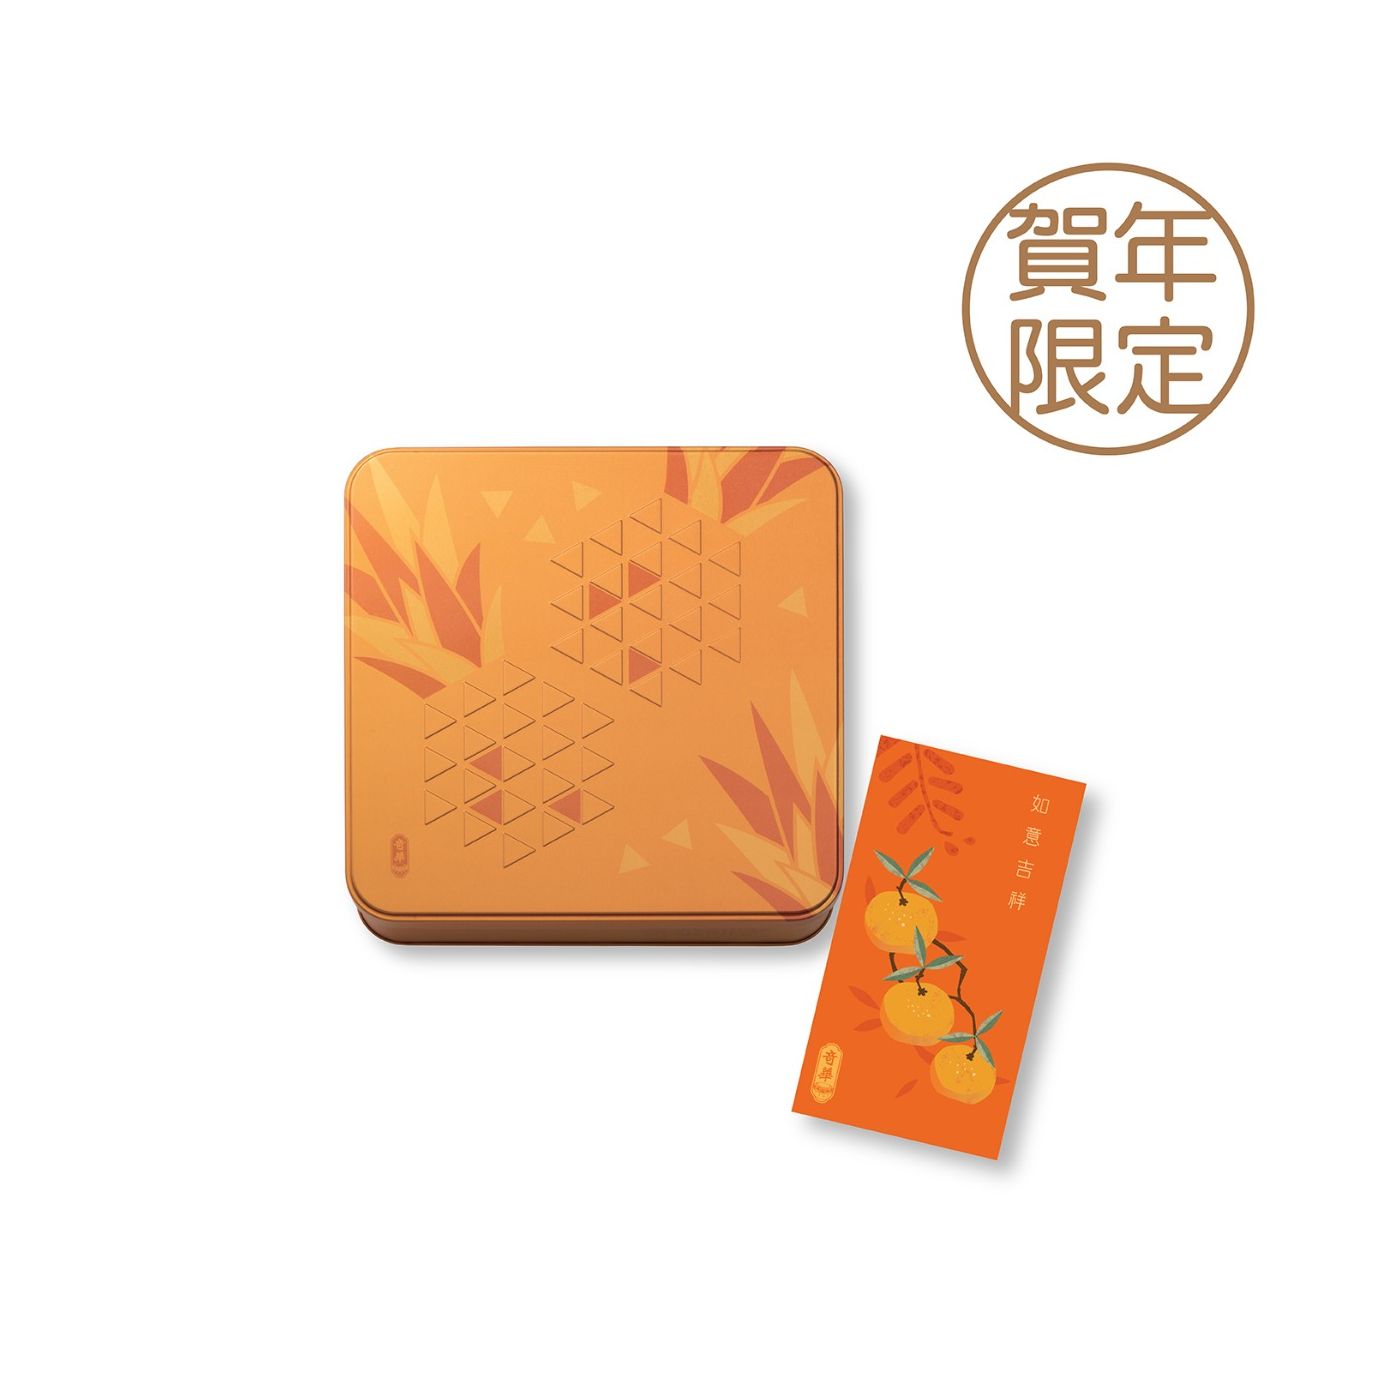 Kee Wah | Chinese New Year Pineapple Shortcake Gift Box (Physical Coupon)